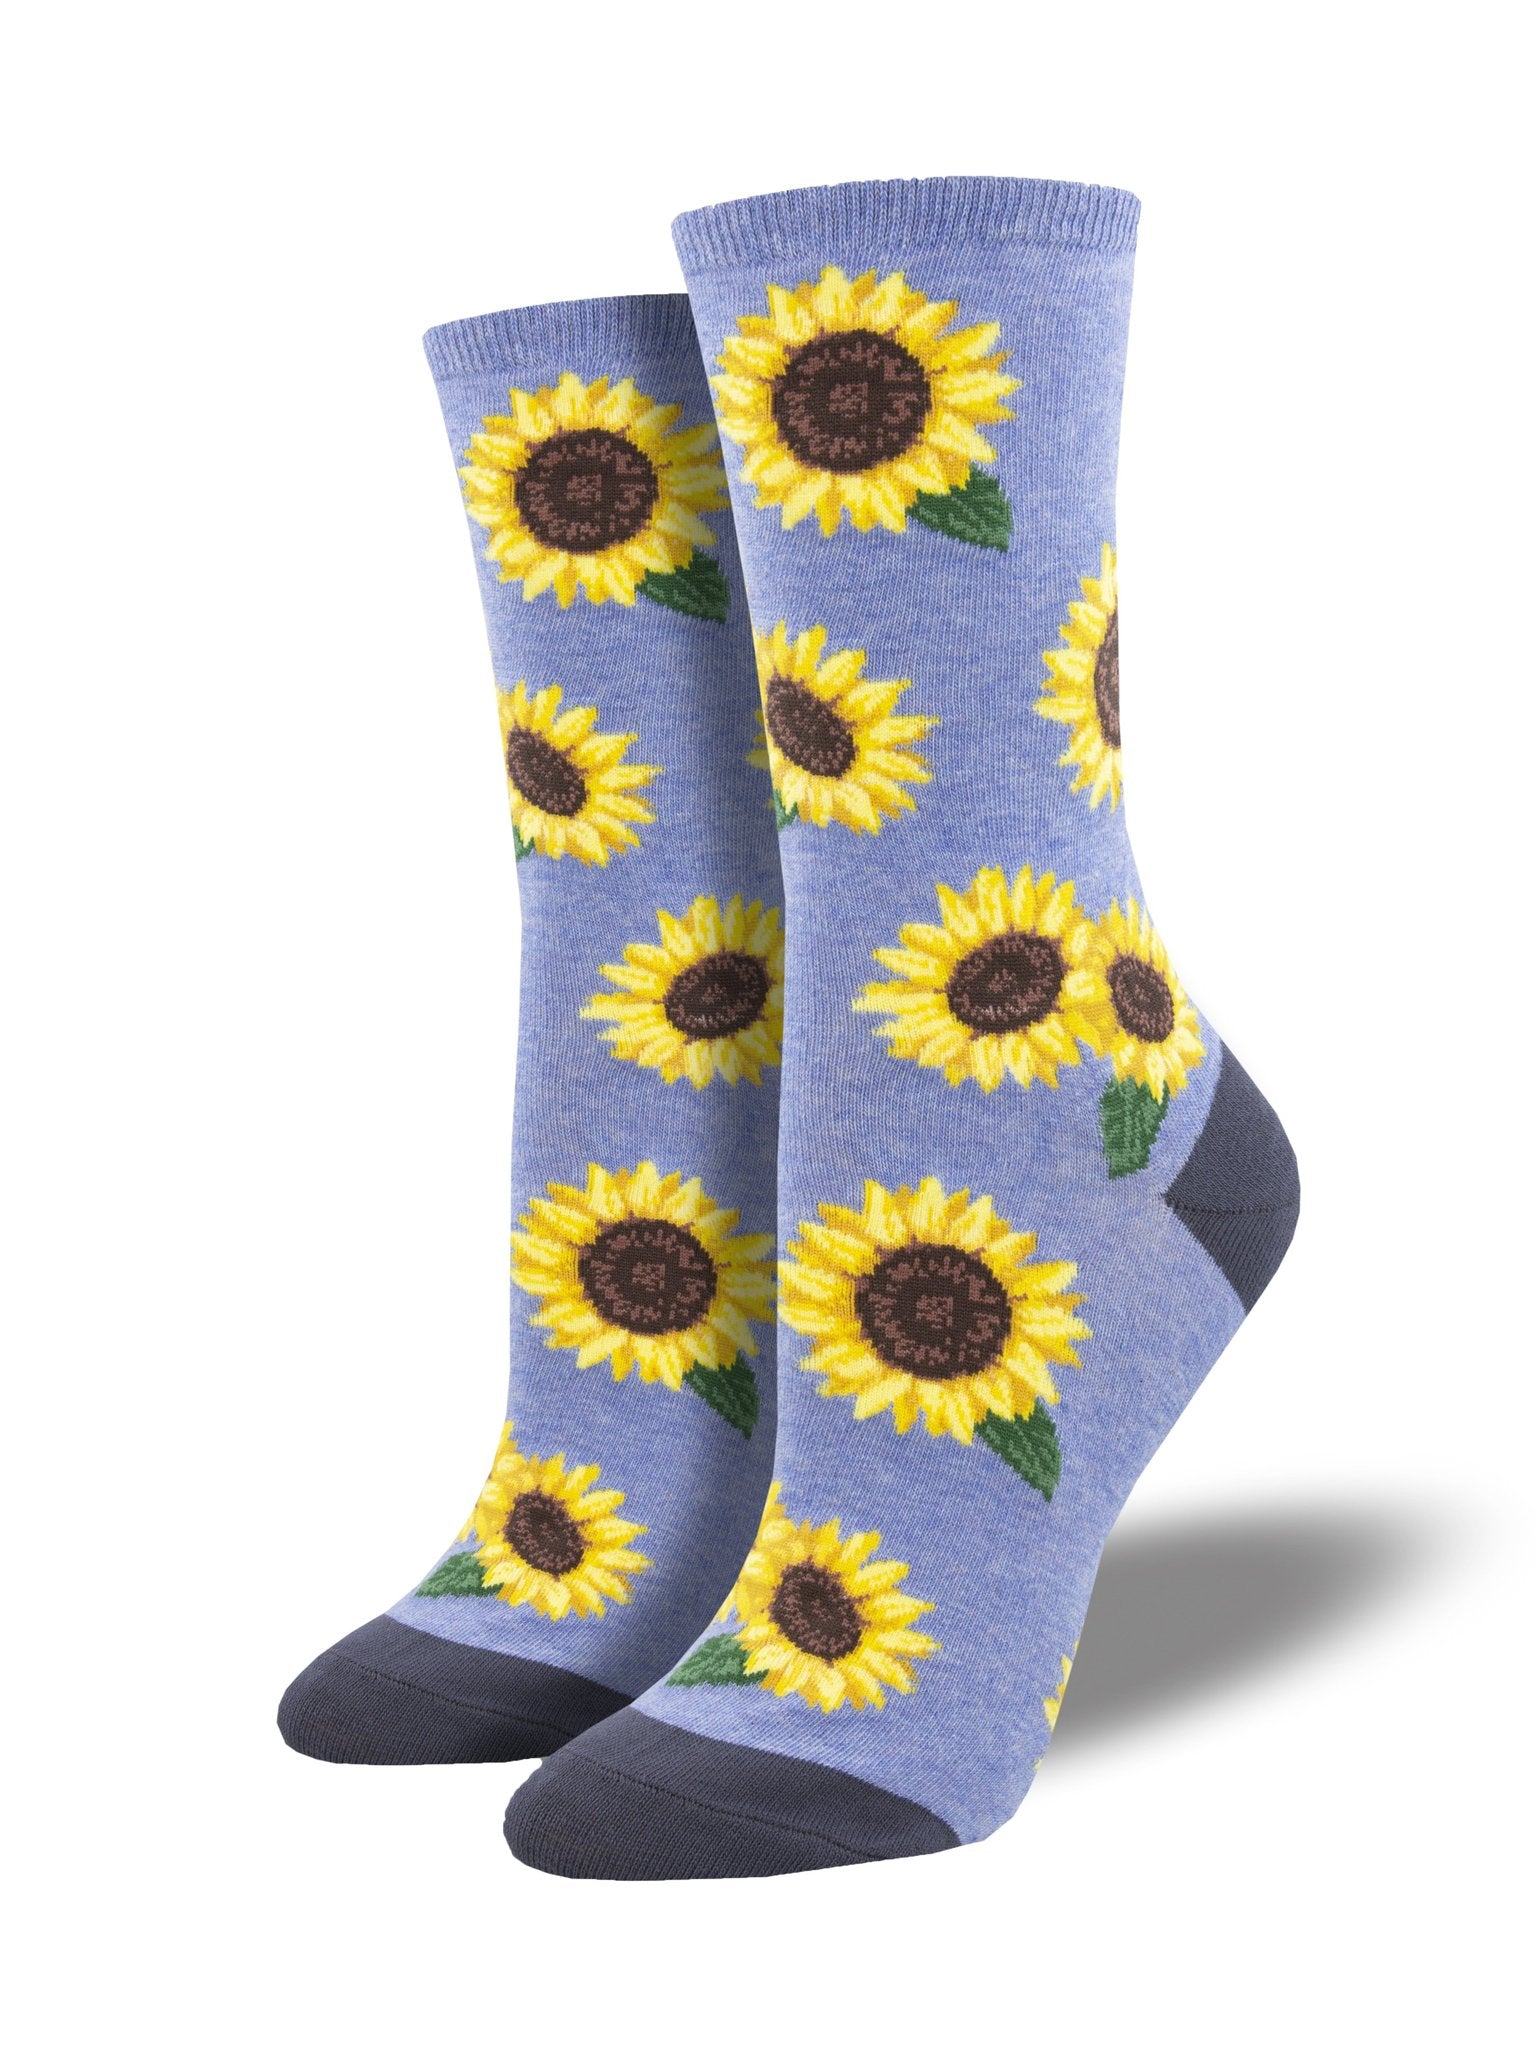 Womens 'More Blooming flower Socks' Socks